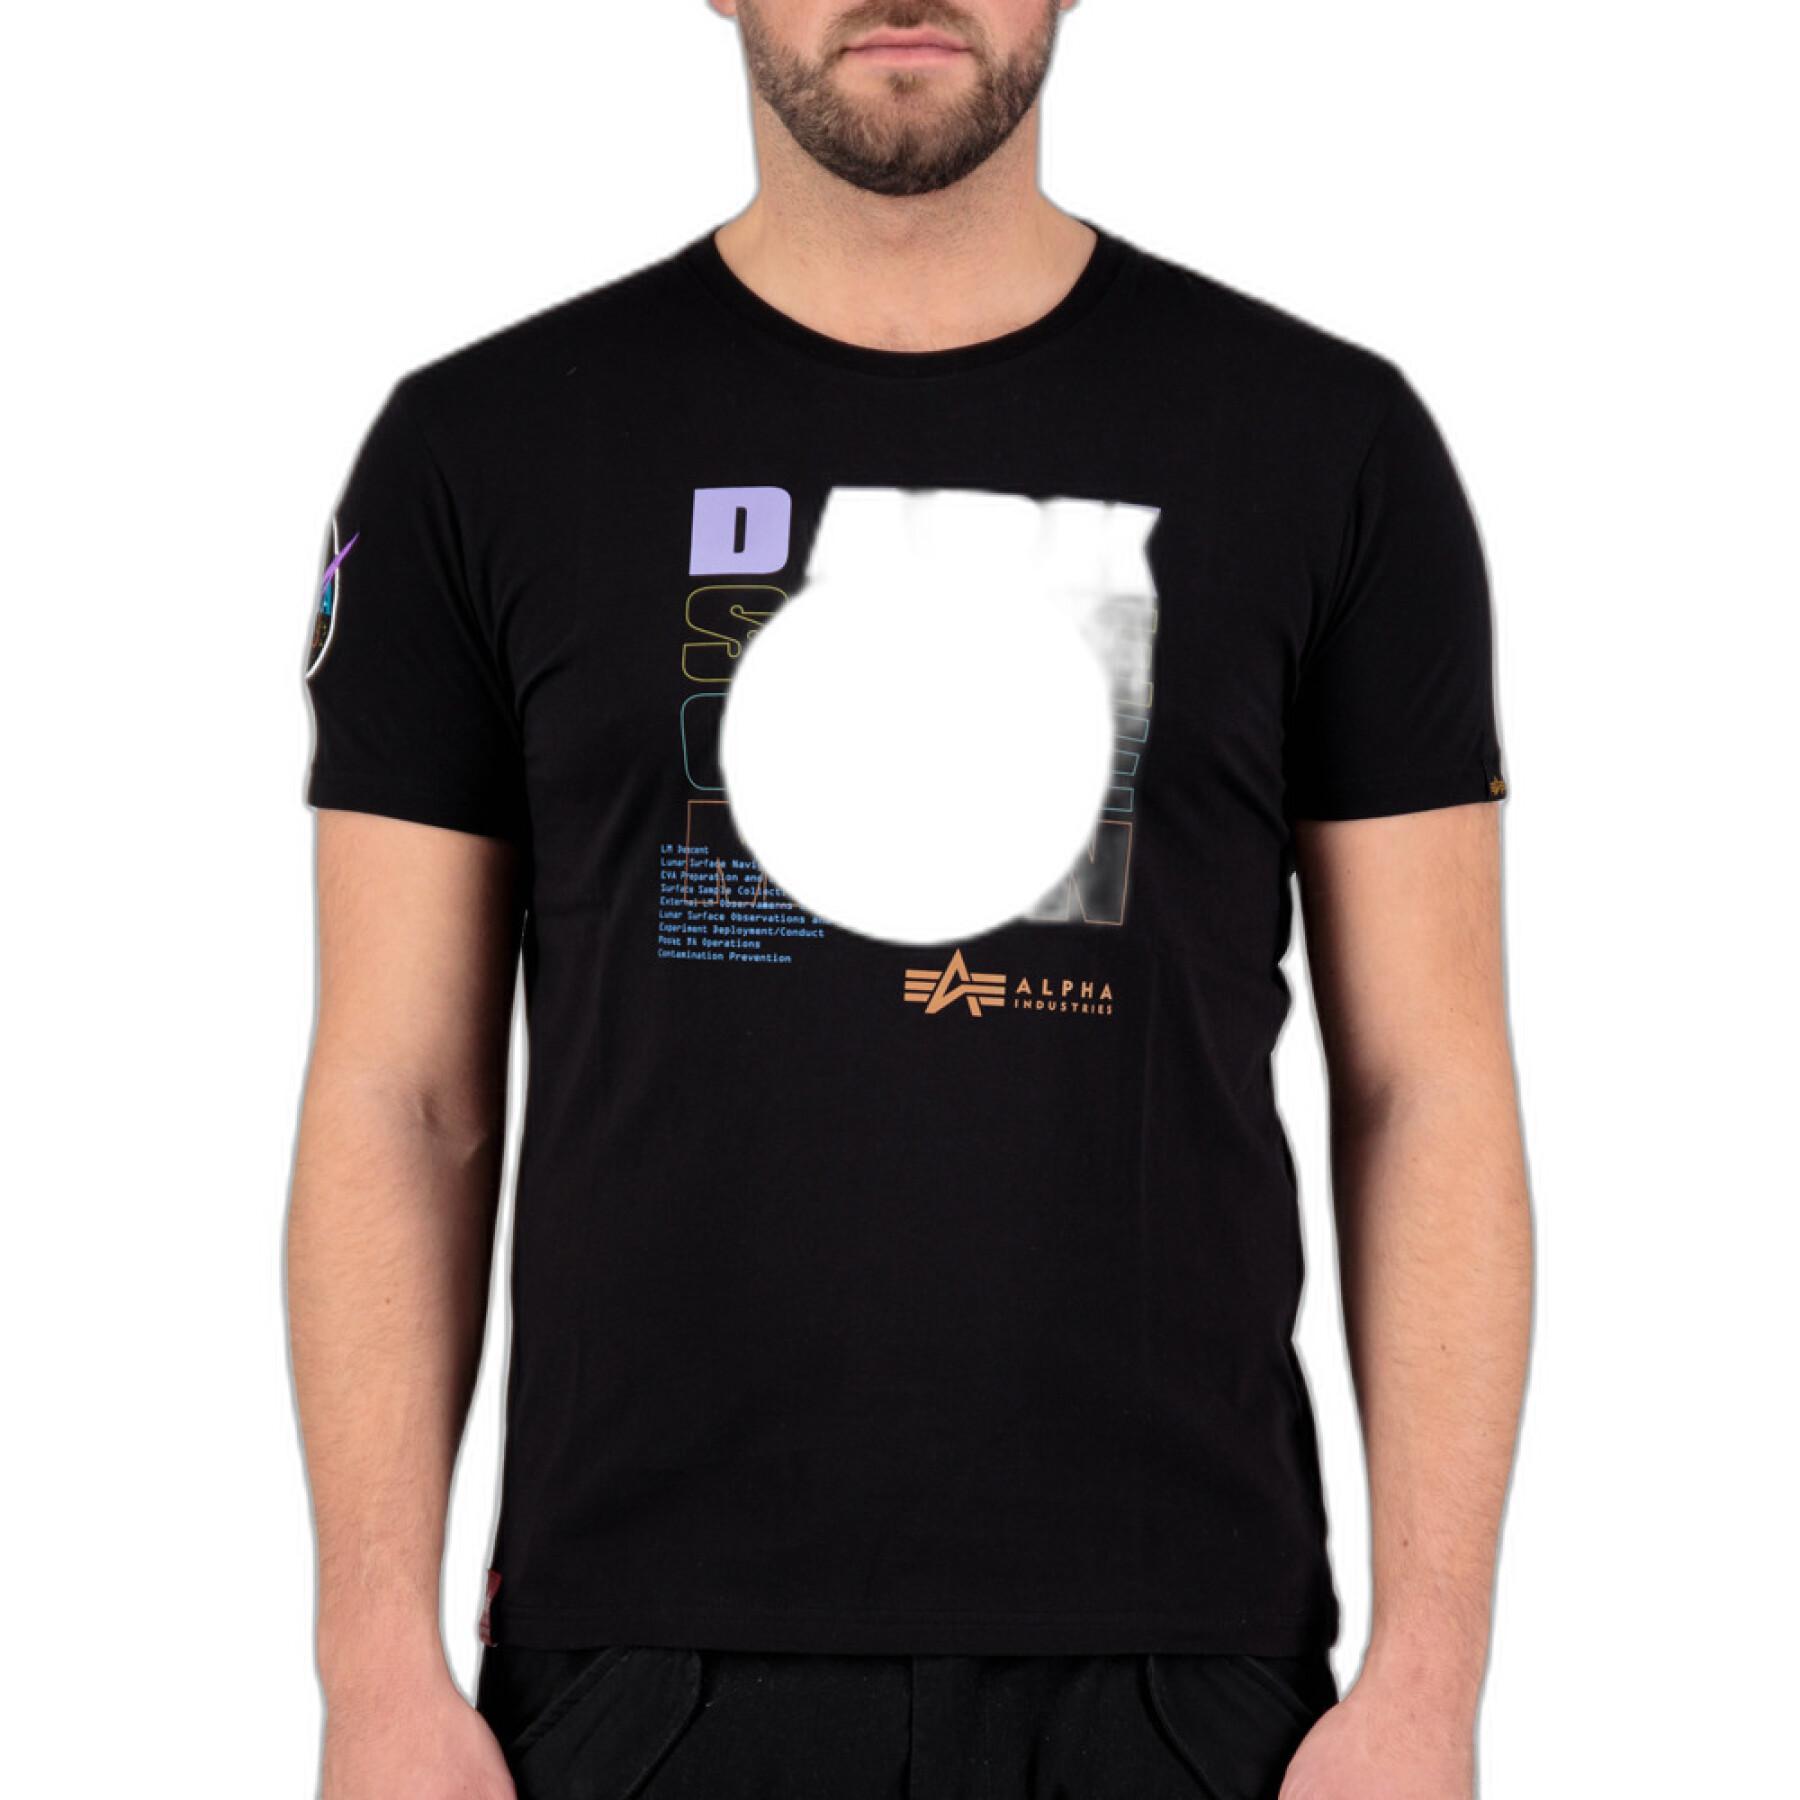 Dark - T-shirts Polo Men Industries - & Side shirts Clothing T-shirt - Alpha